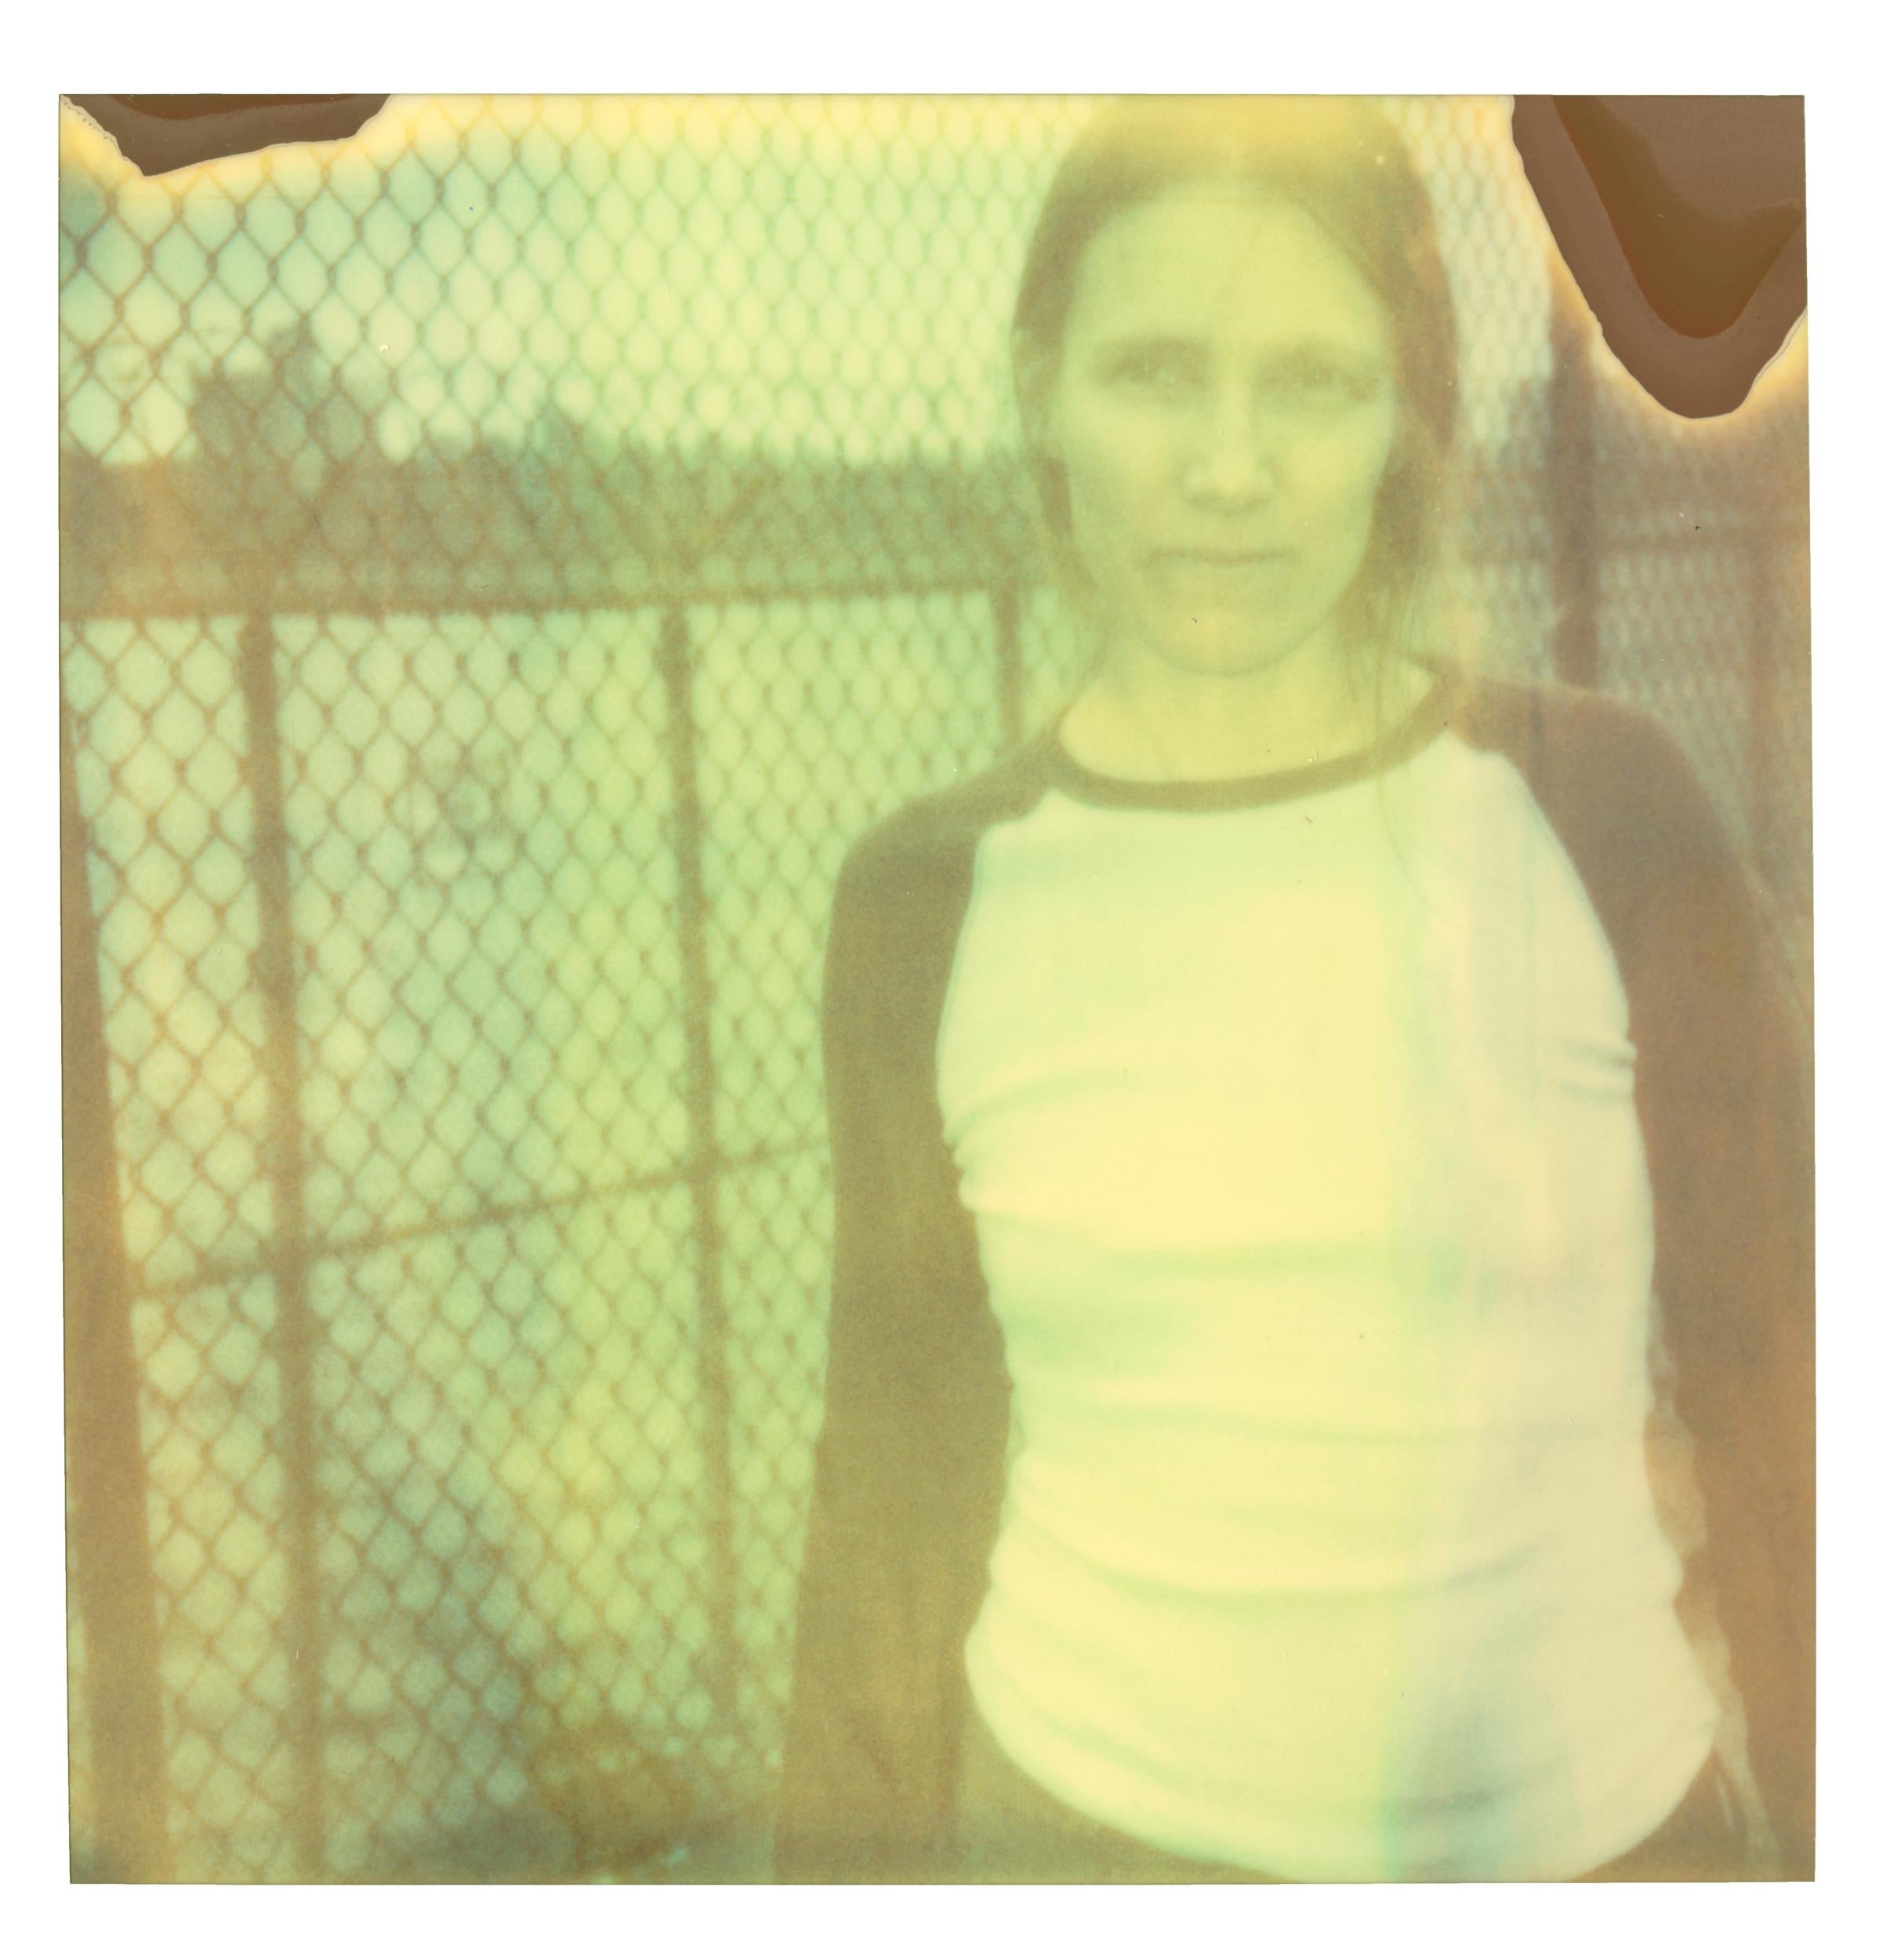 Self Portrait (Strange Love) - Polaroid, New York